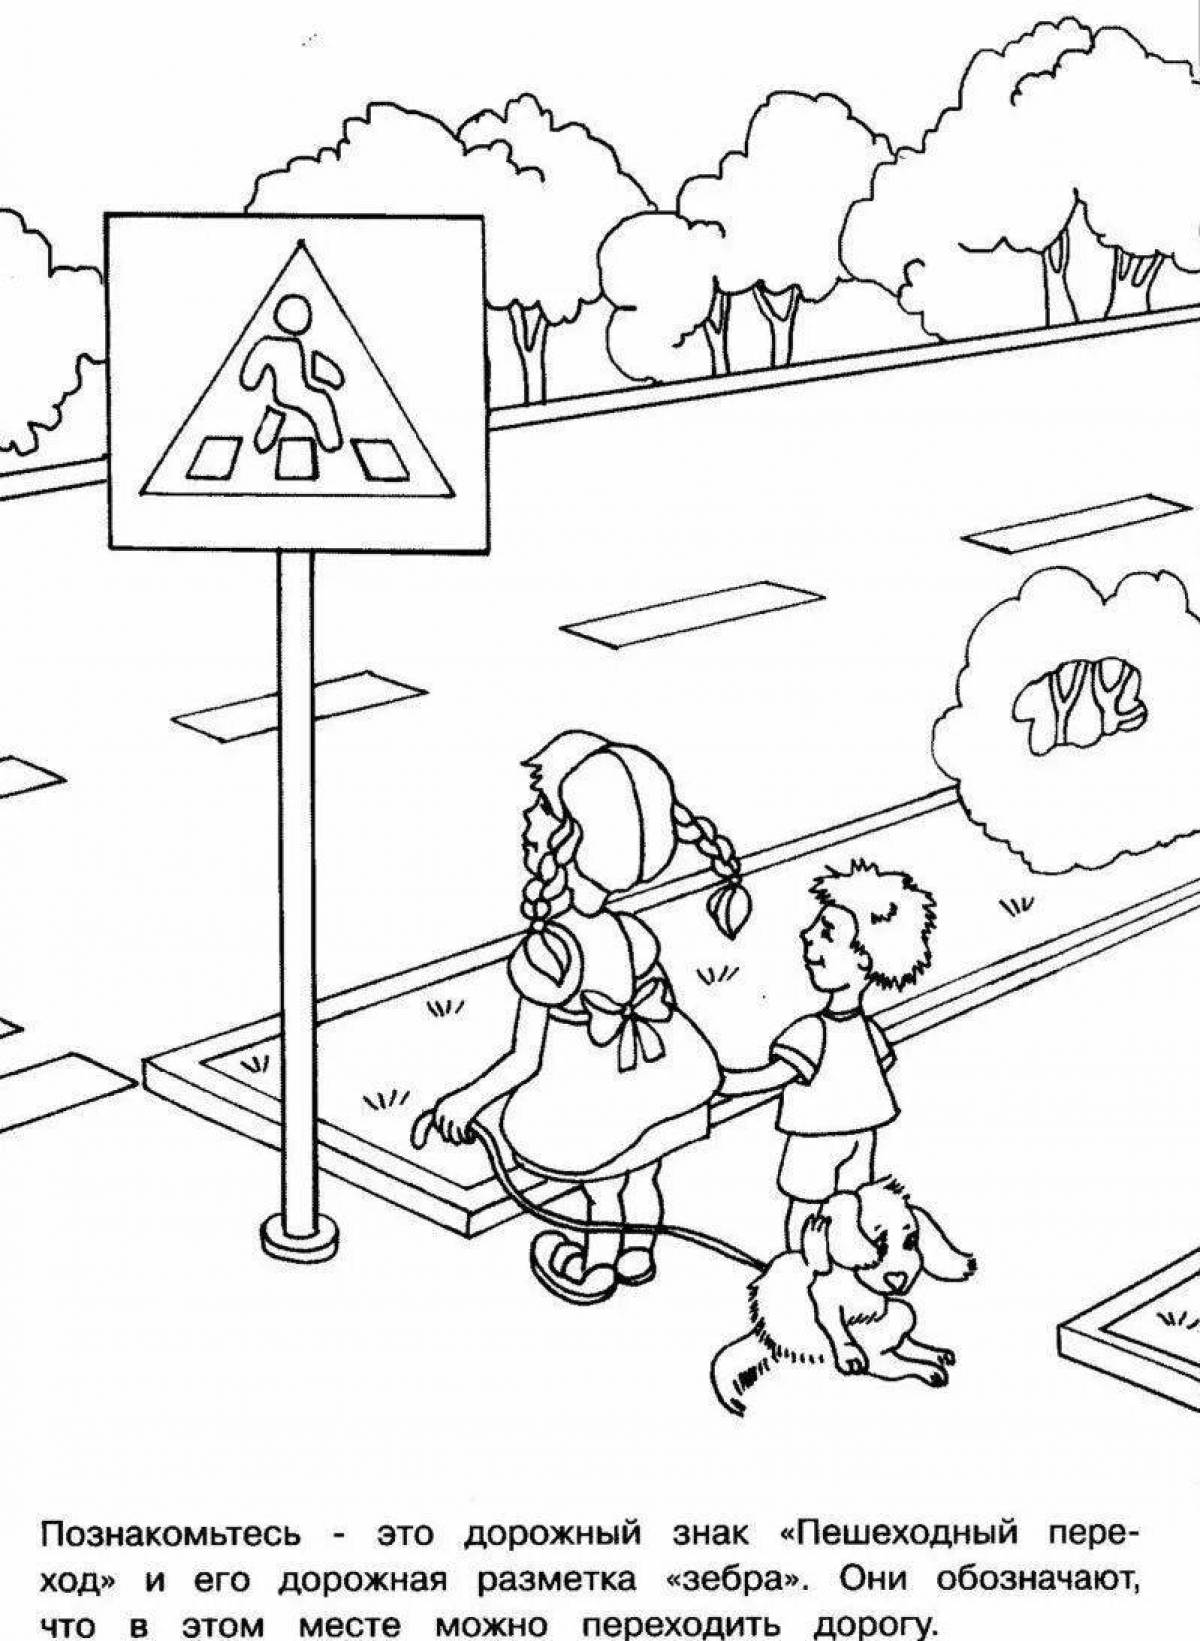 For children traffic rules for preschoolers #18